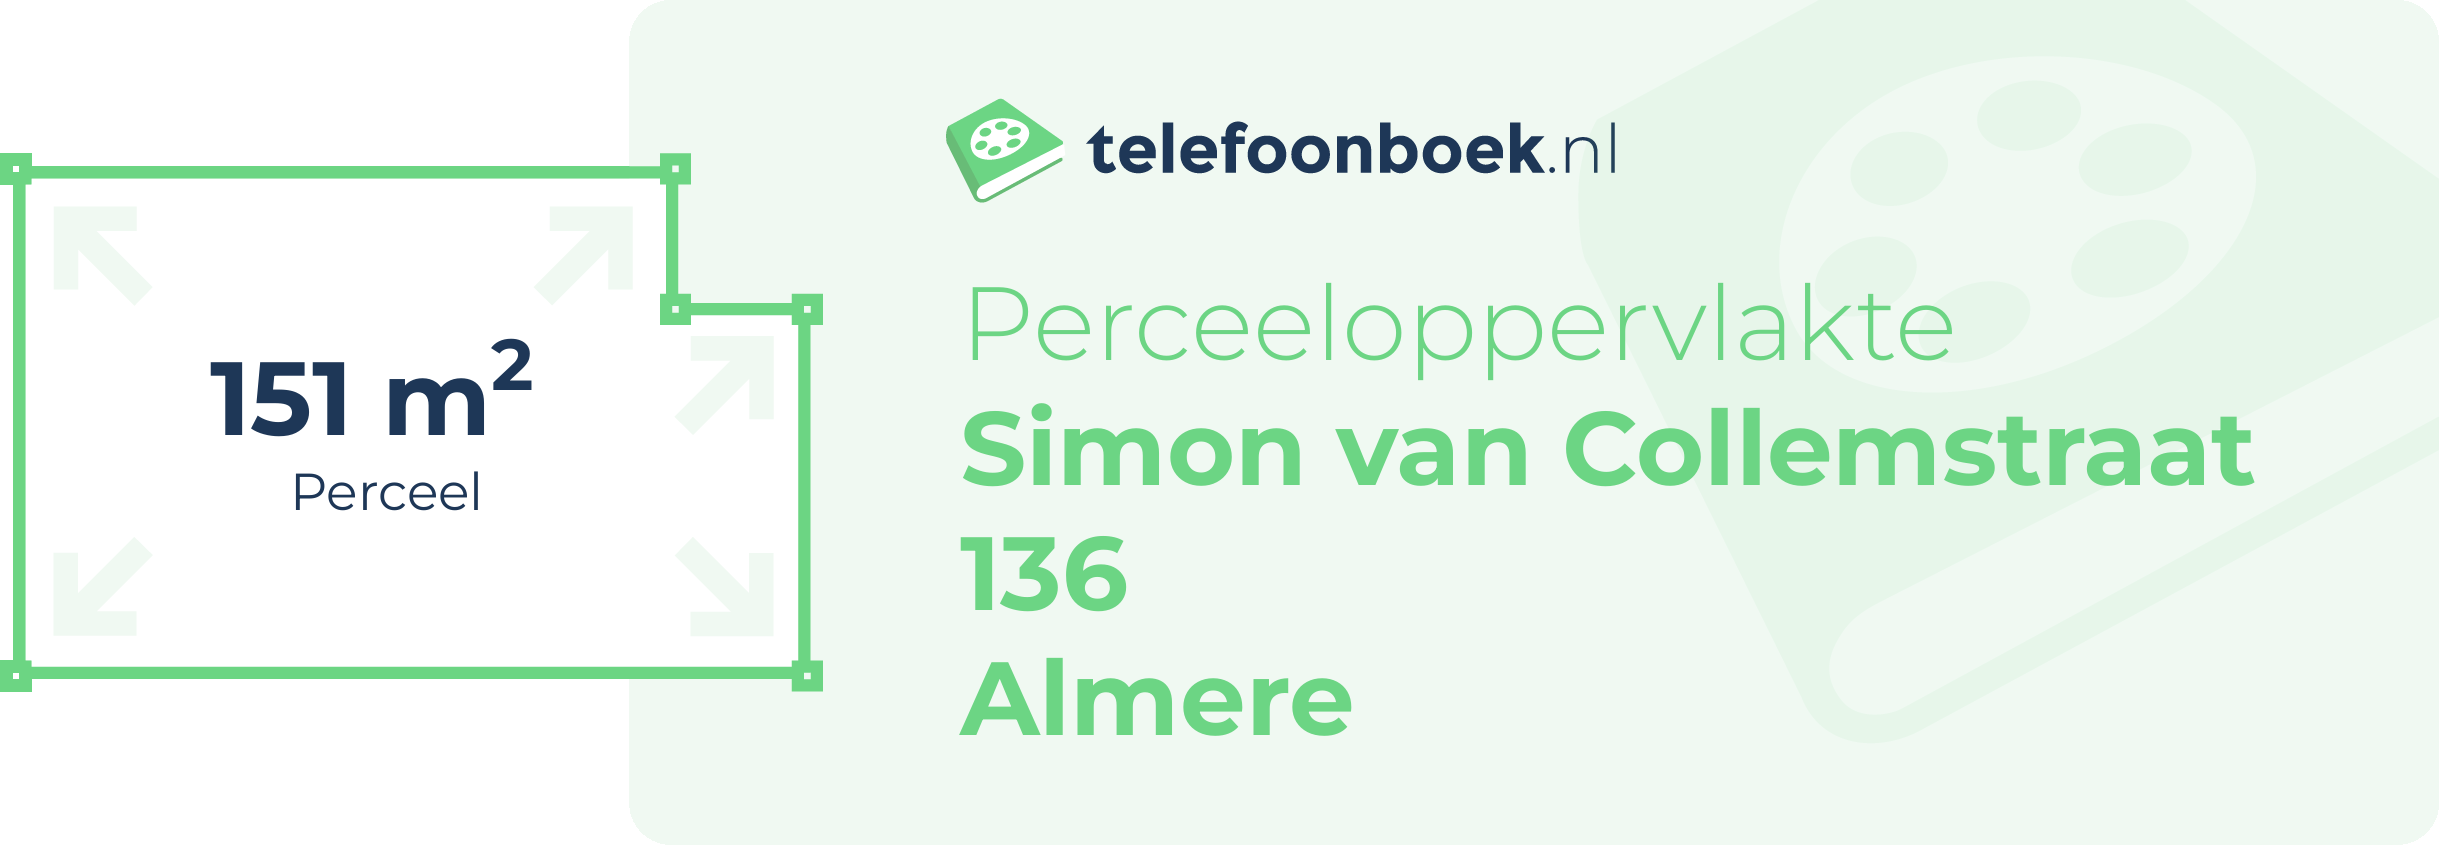 Perceeloppervlakte Simon Van Collemstraat 136 Almere